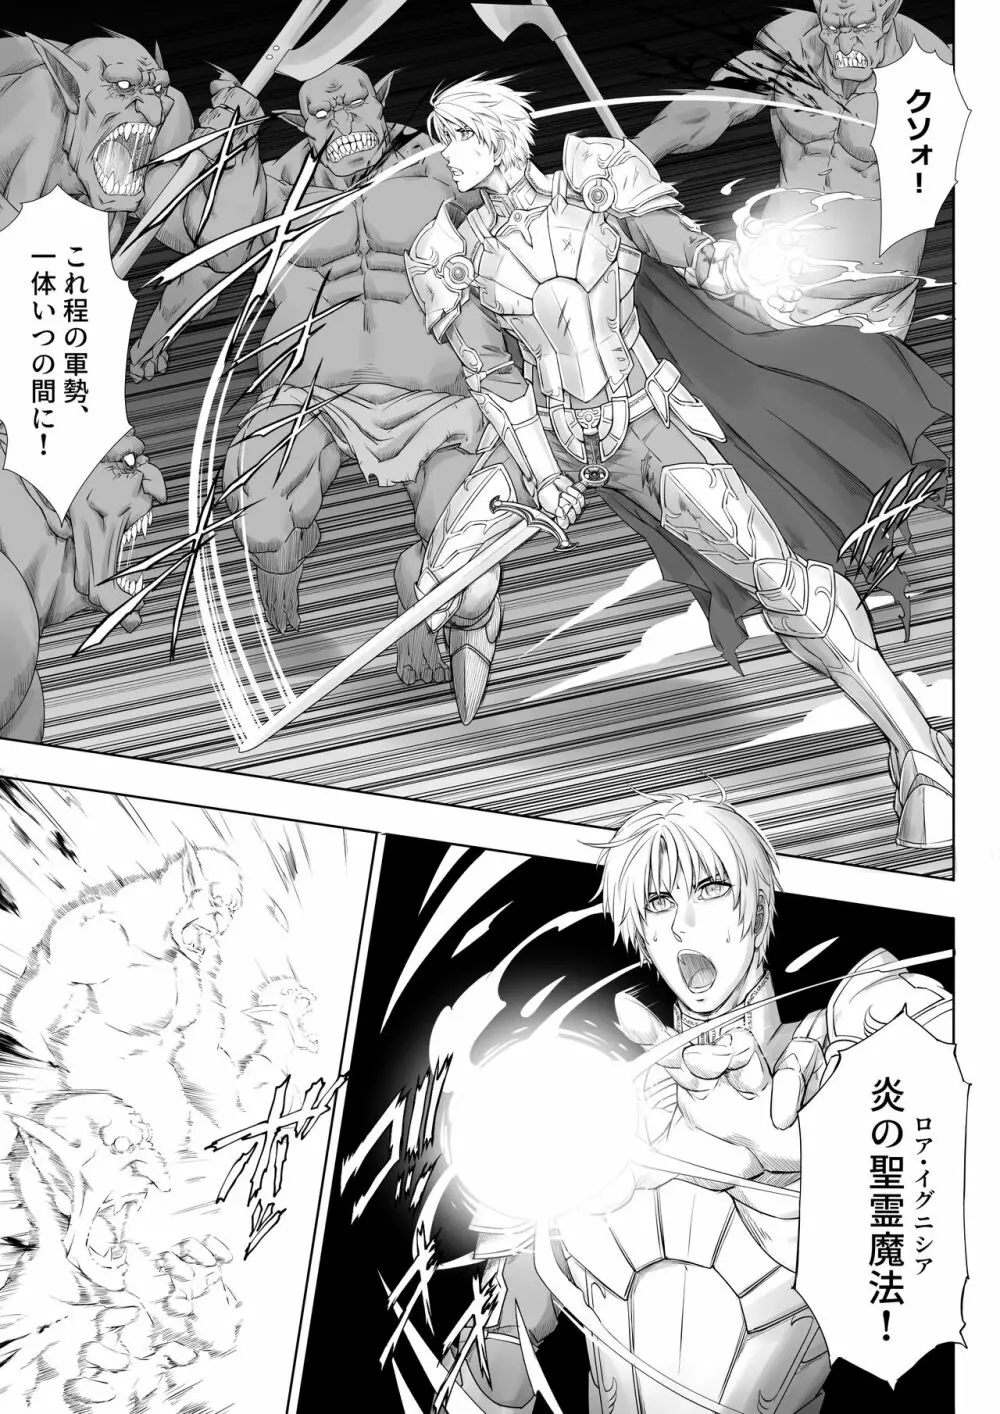 Knight of Labyrinth / ナイト オブ ラビリンス - page7